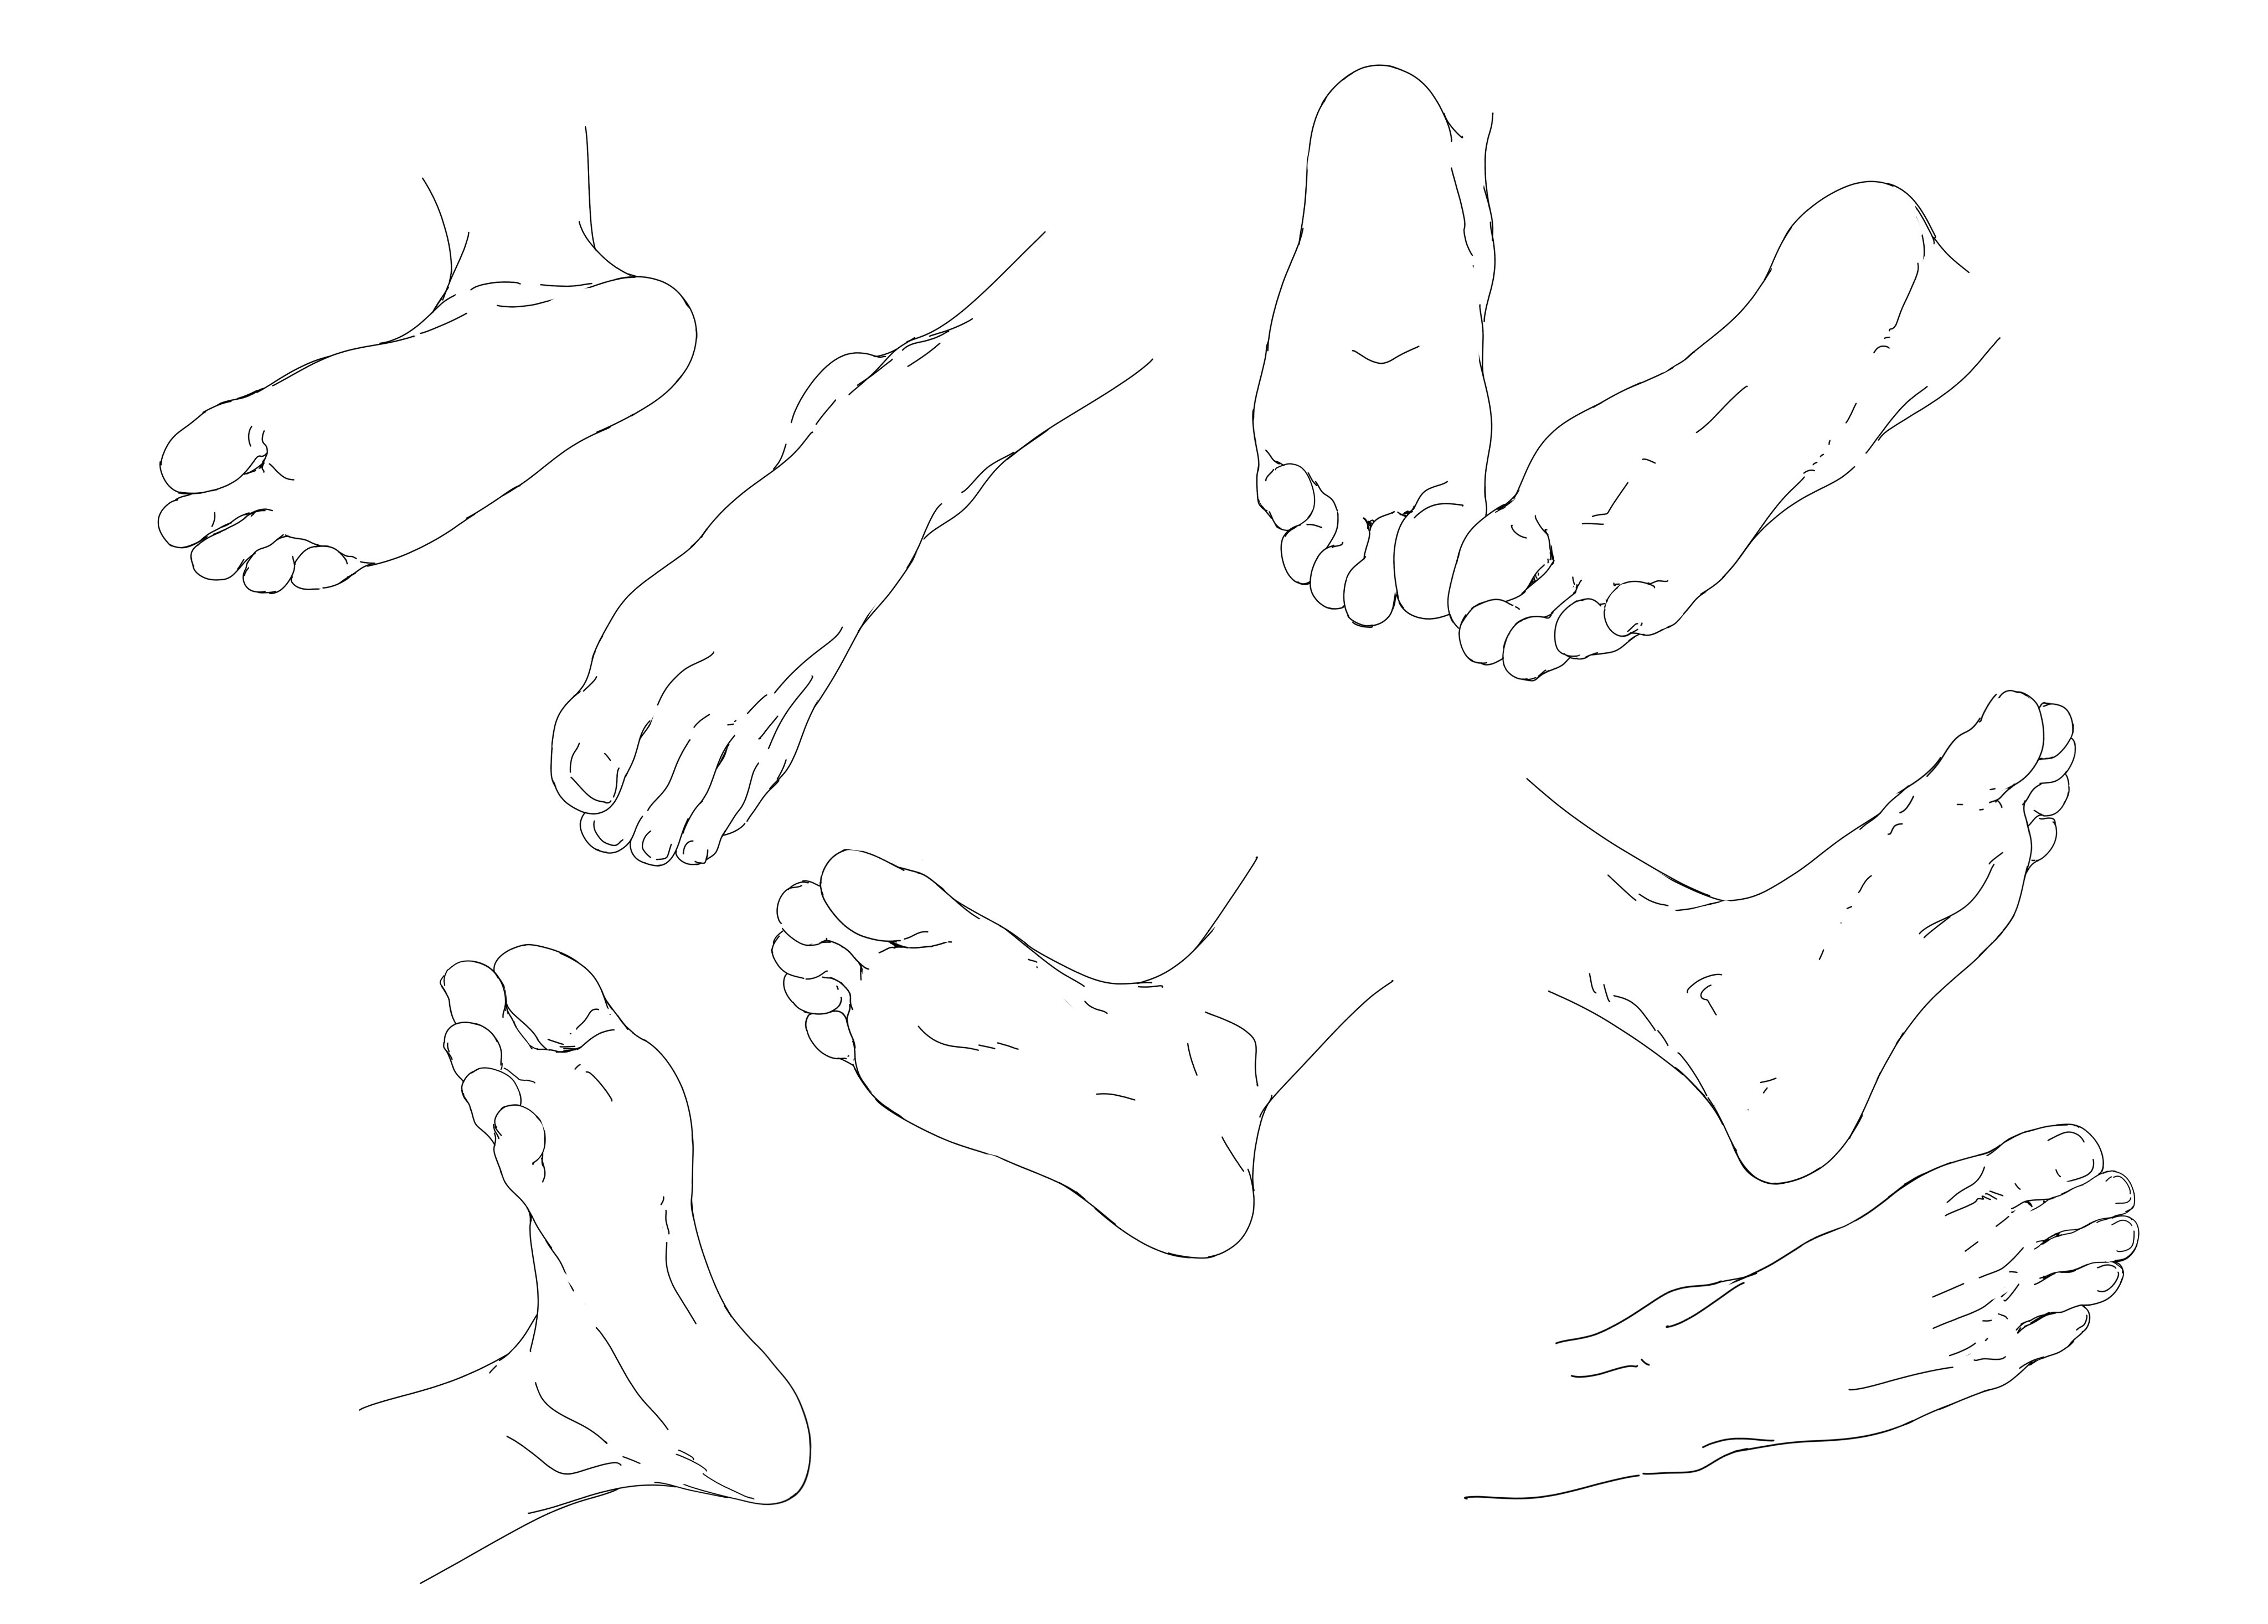 Drawing tutorials - Feet - Imgur